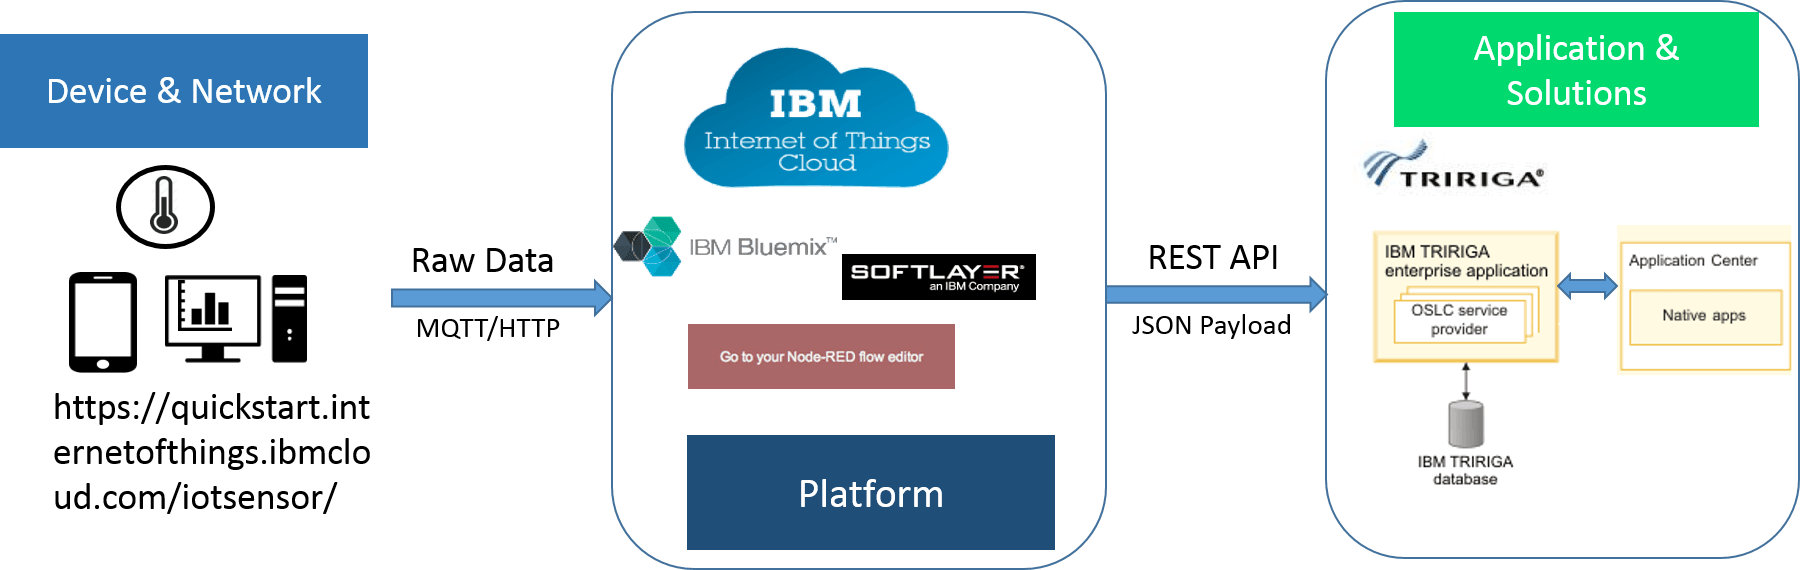 TRIRIGA Logo - Work Order Creation using Watson IoT Platform and TRIRIGA REST API ...